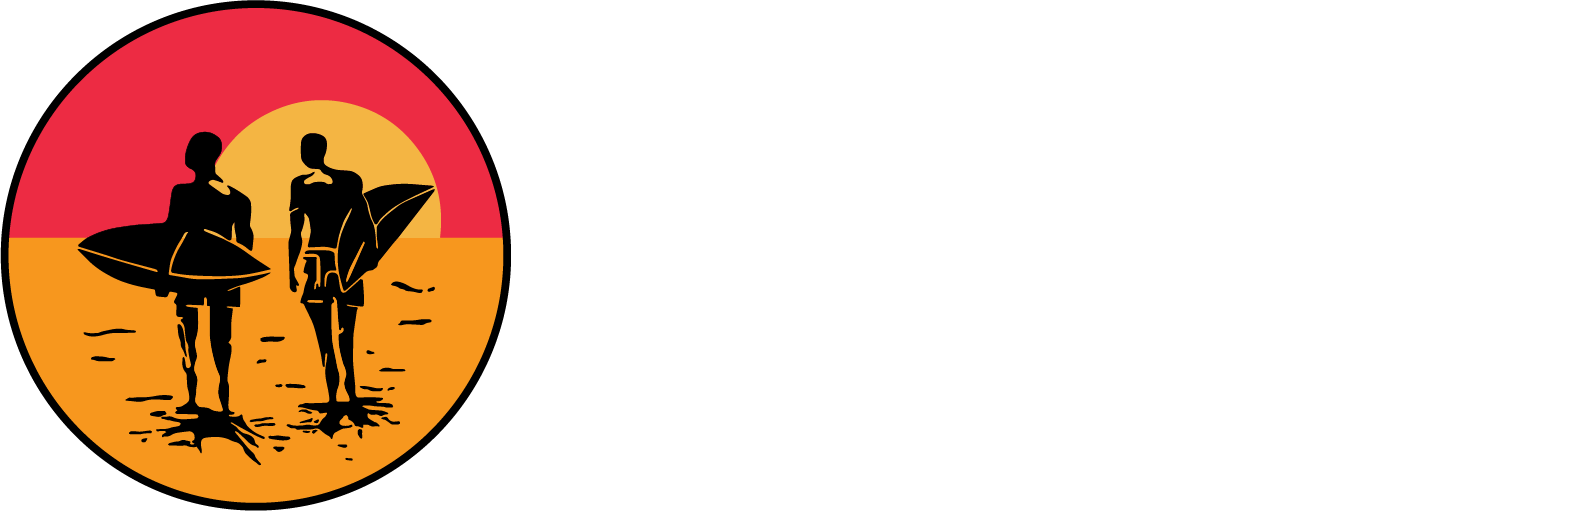 Memory Fabric Forum